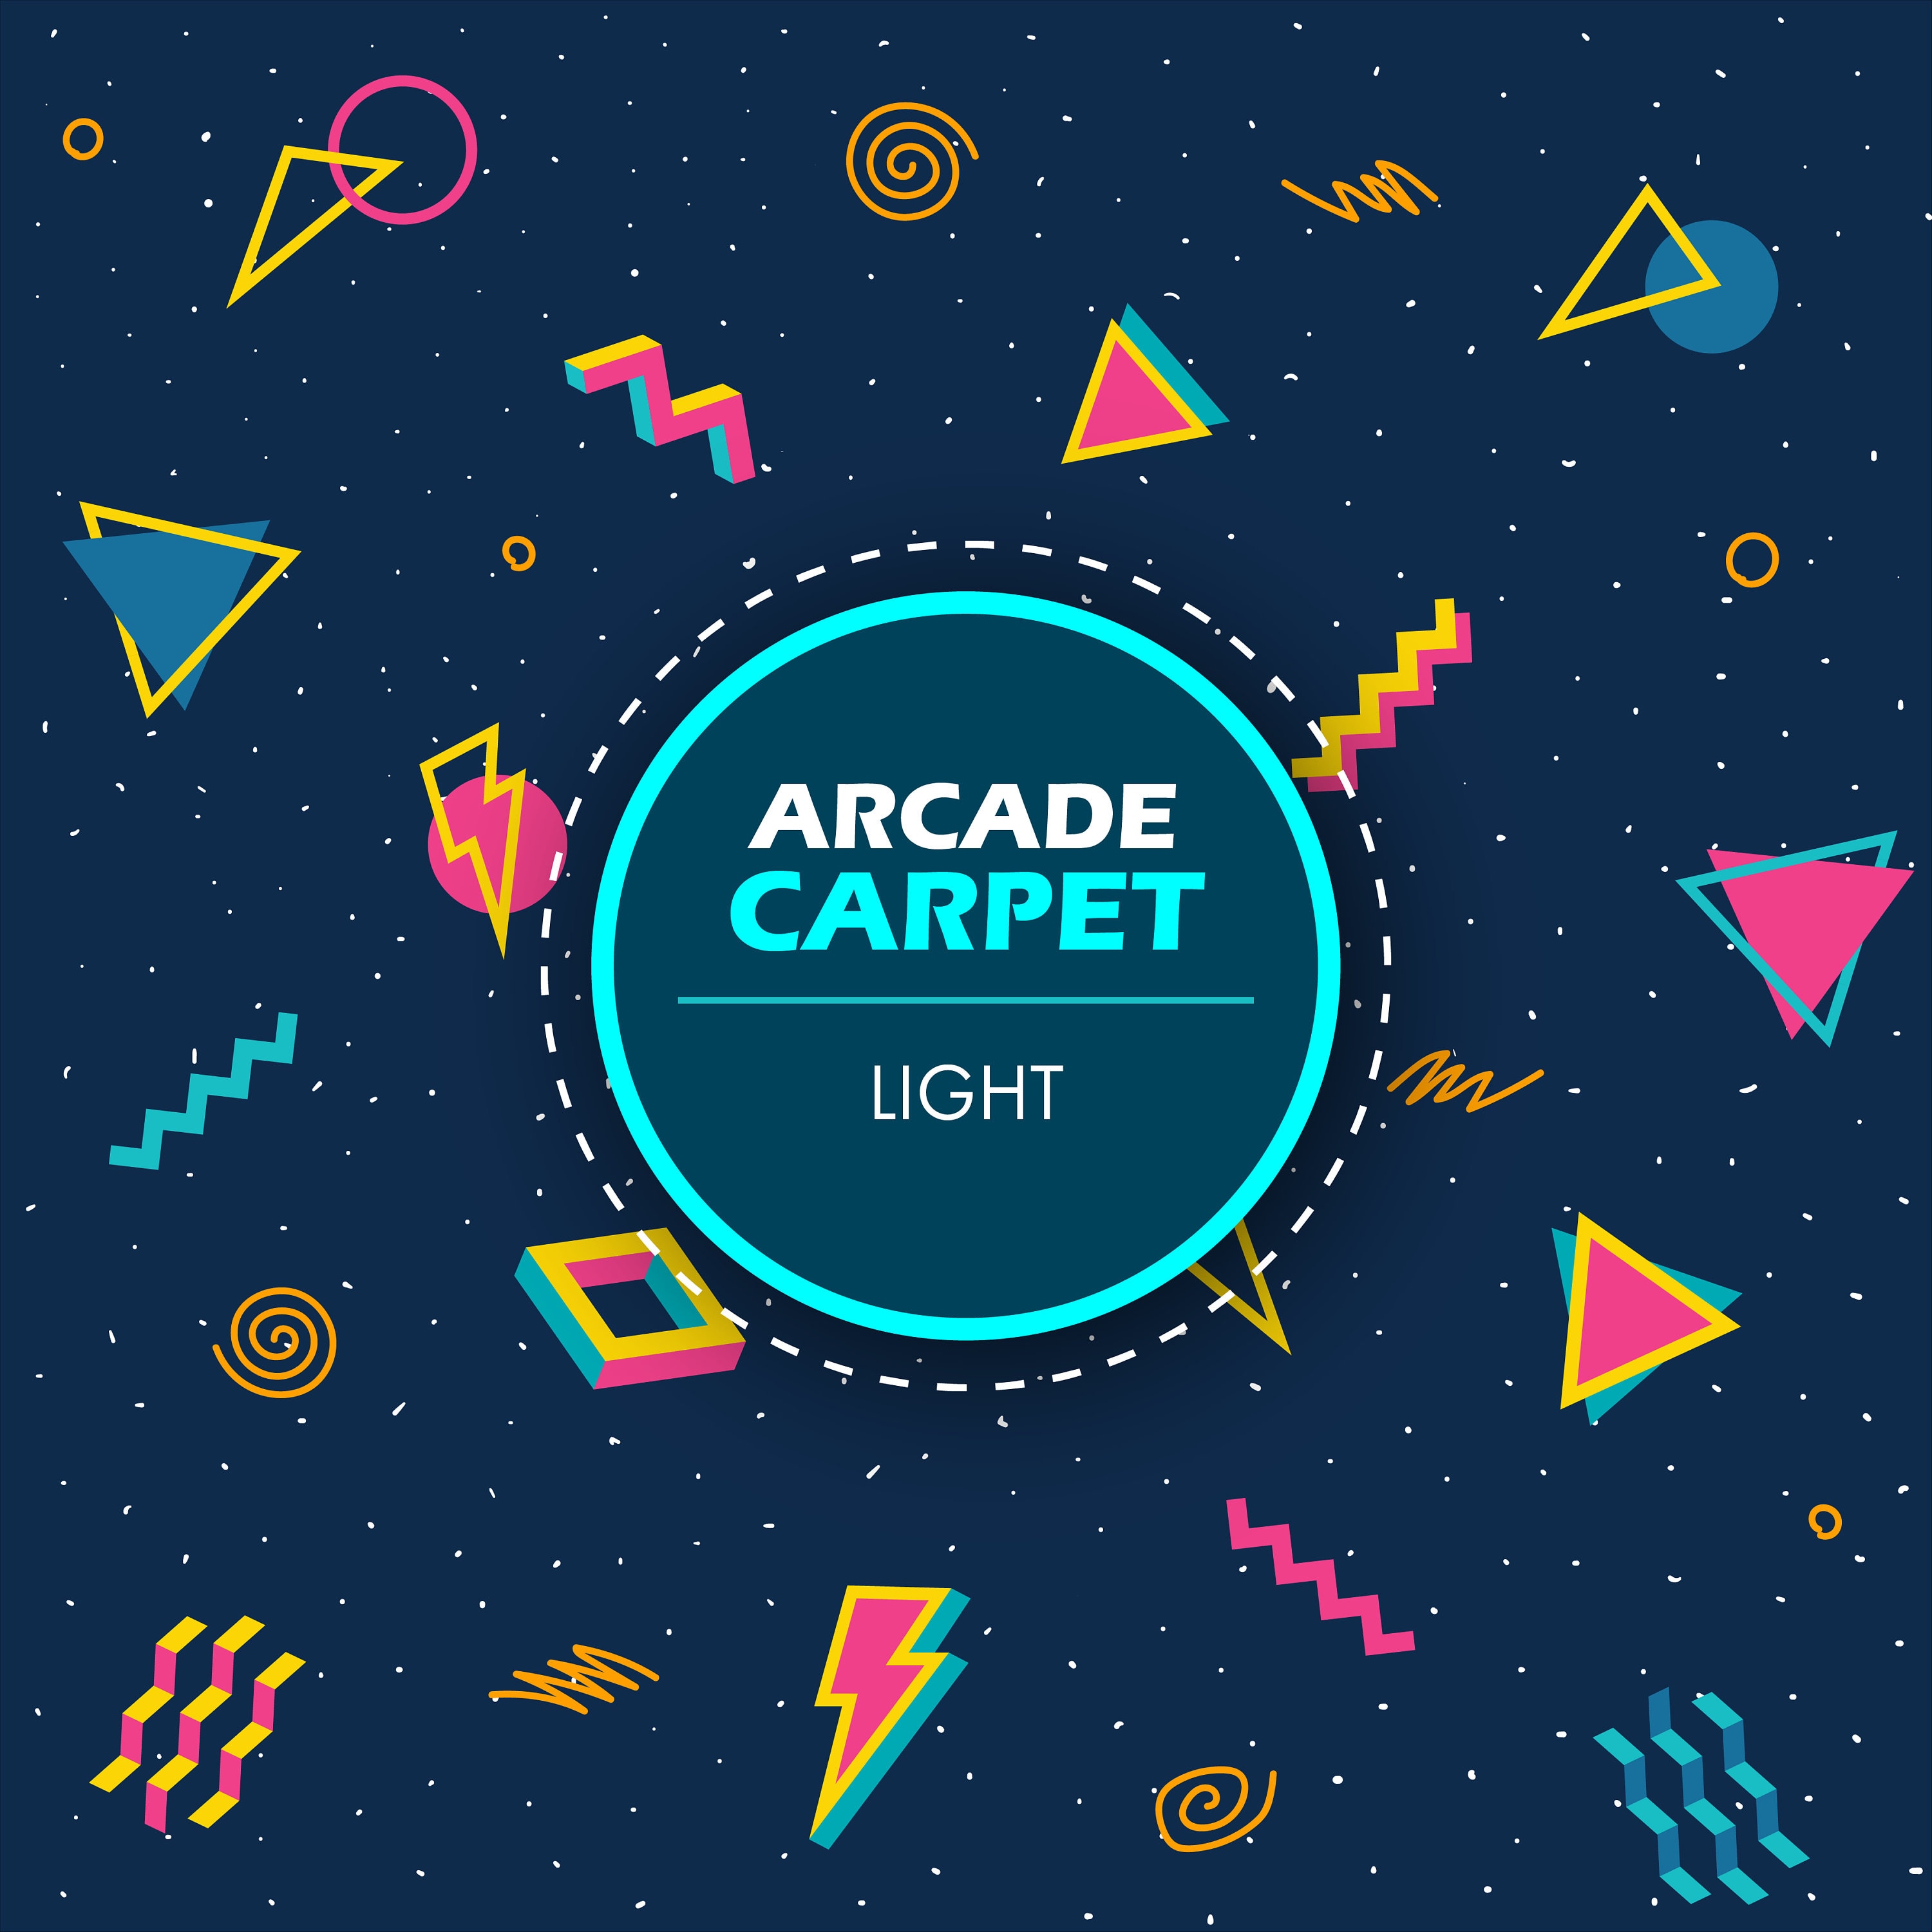 Retro Arcade Carpet Pattern Seamless / Repeating Image 80s